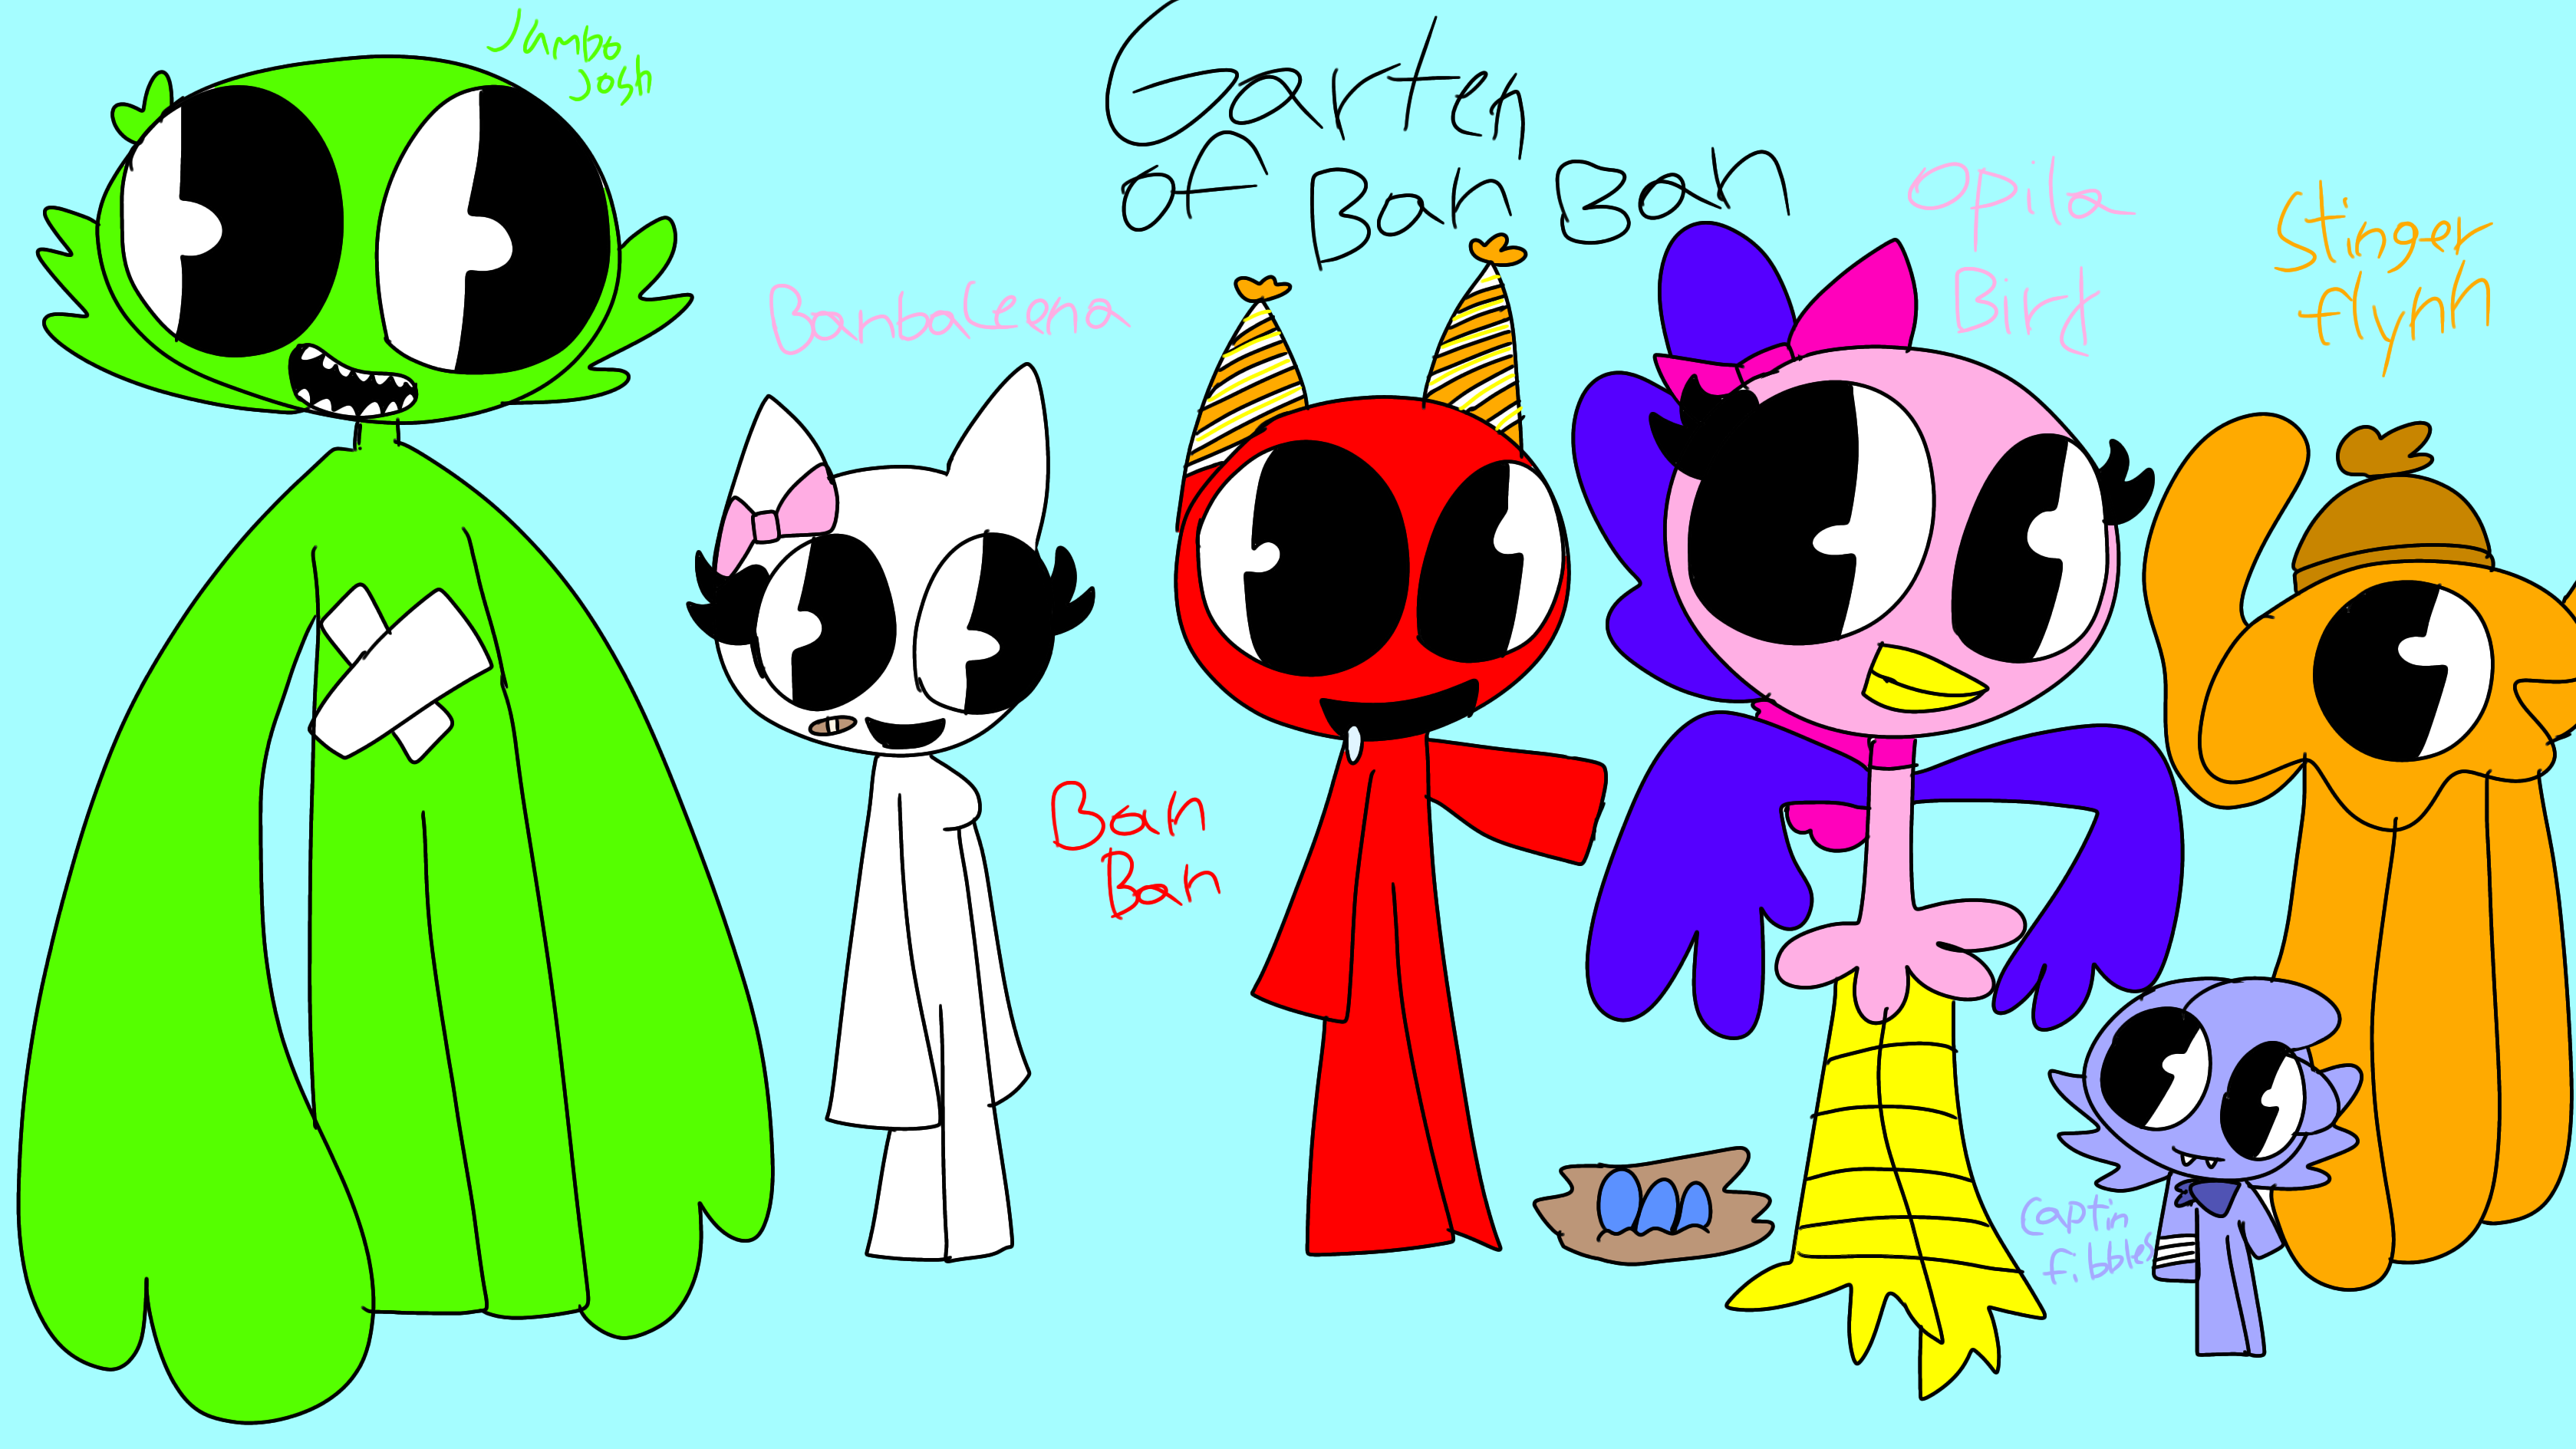 My concept characters for Garten of banban 3